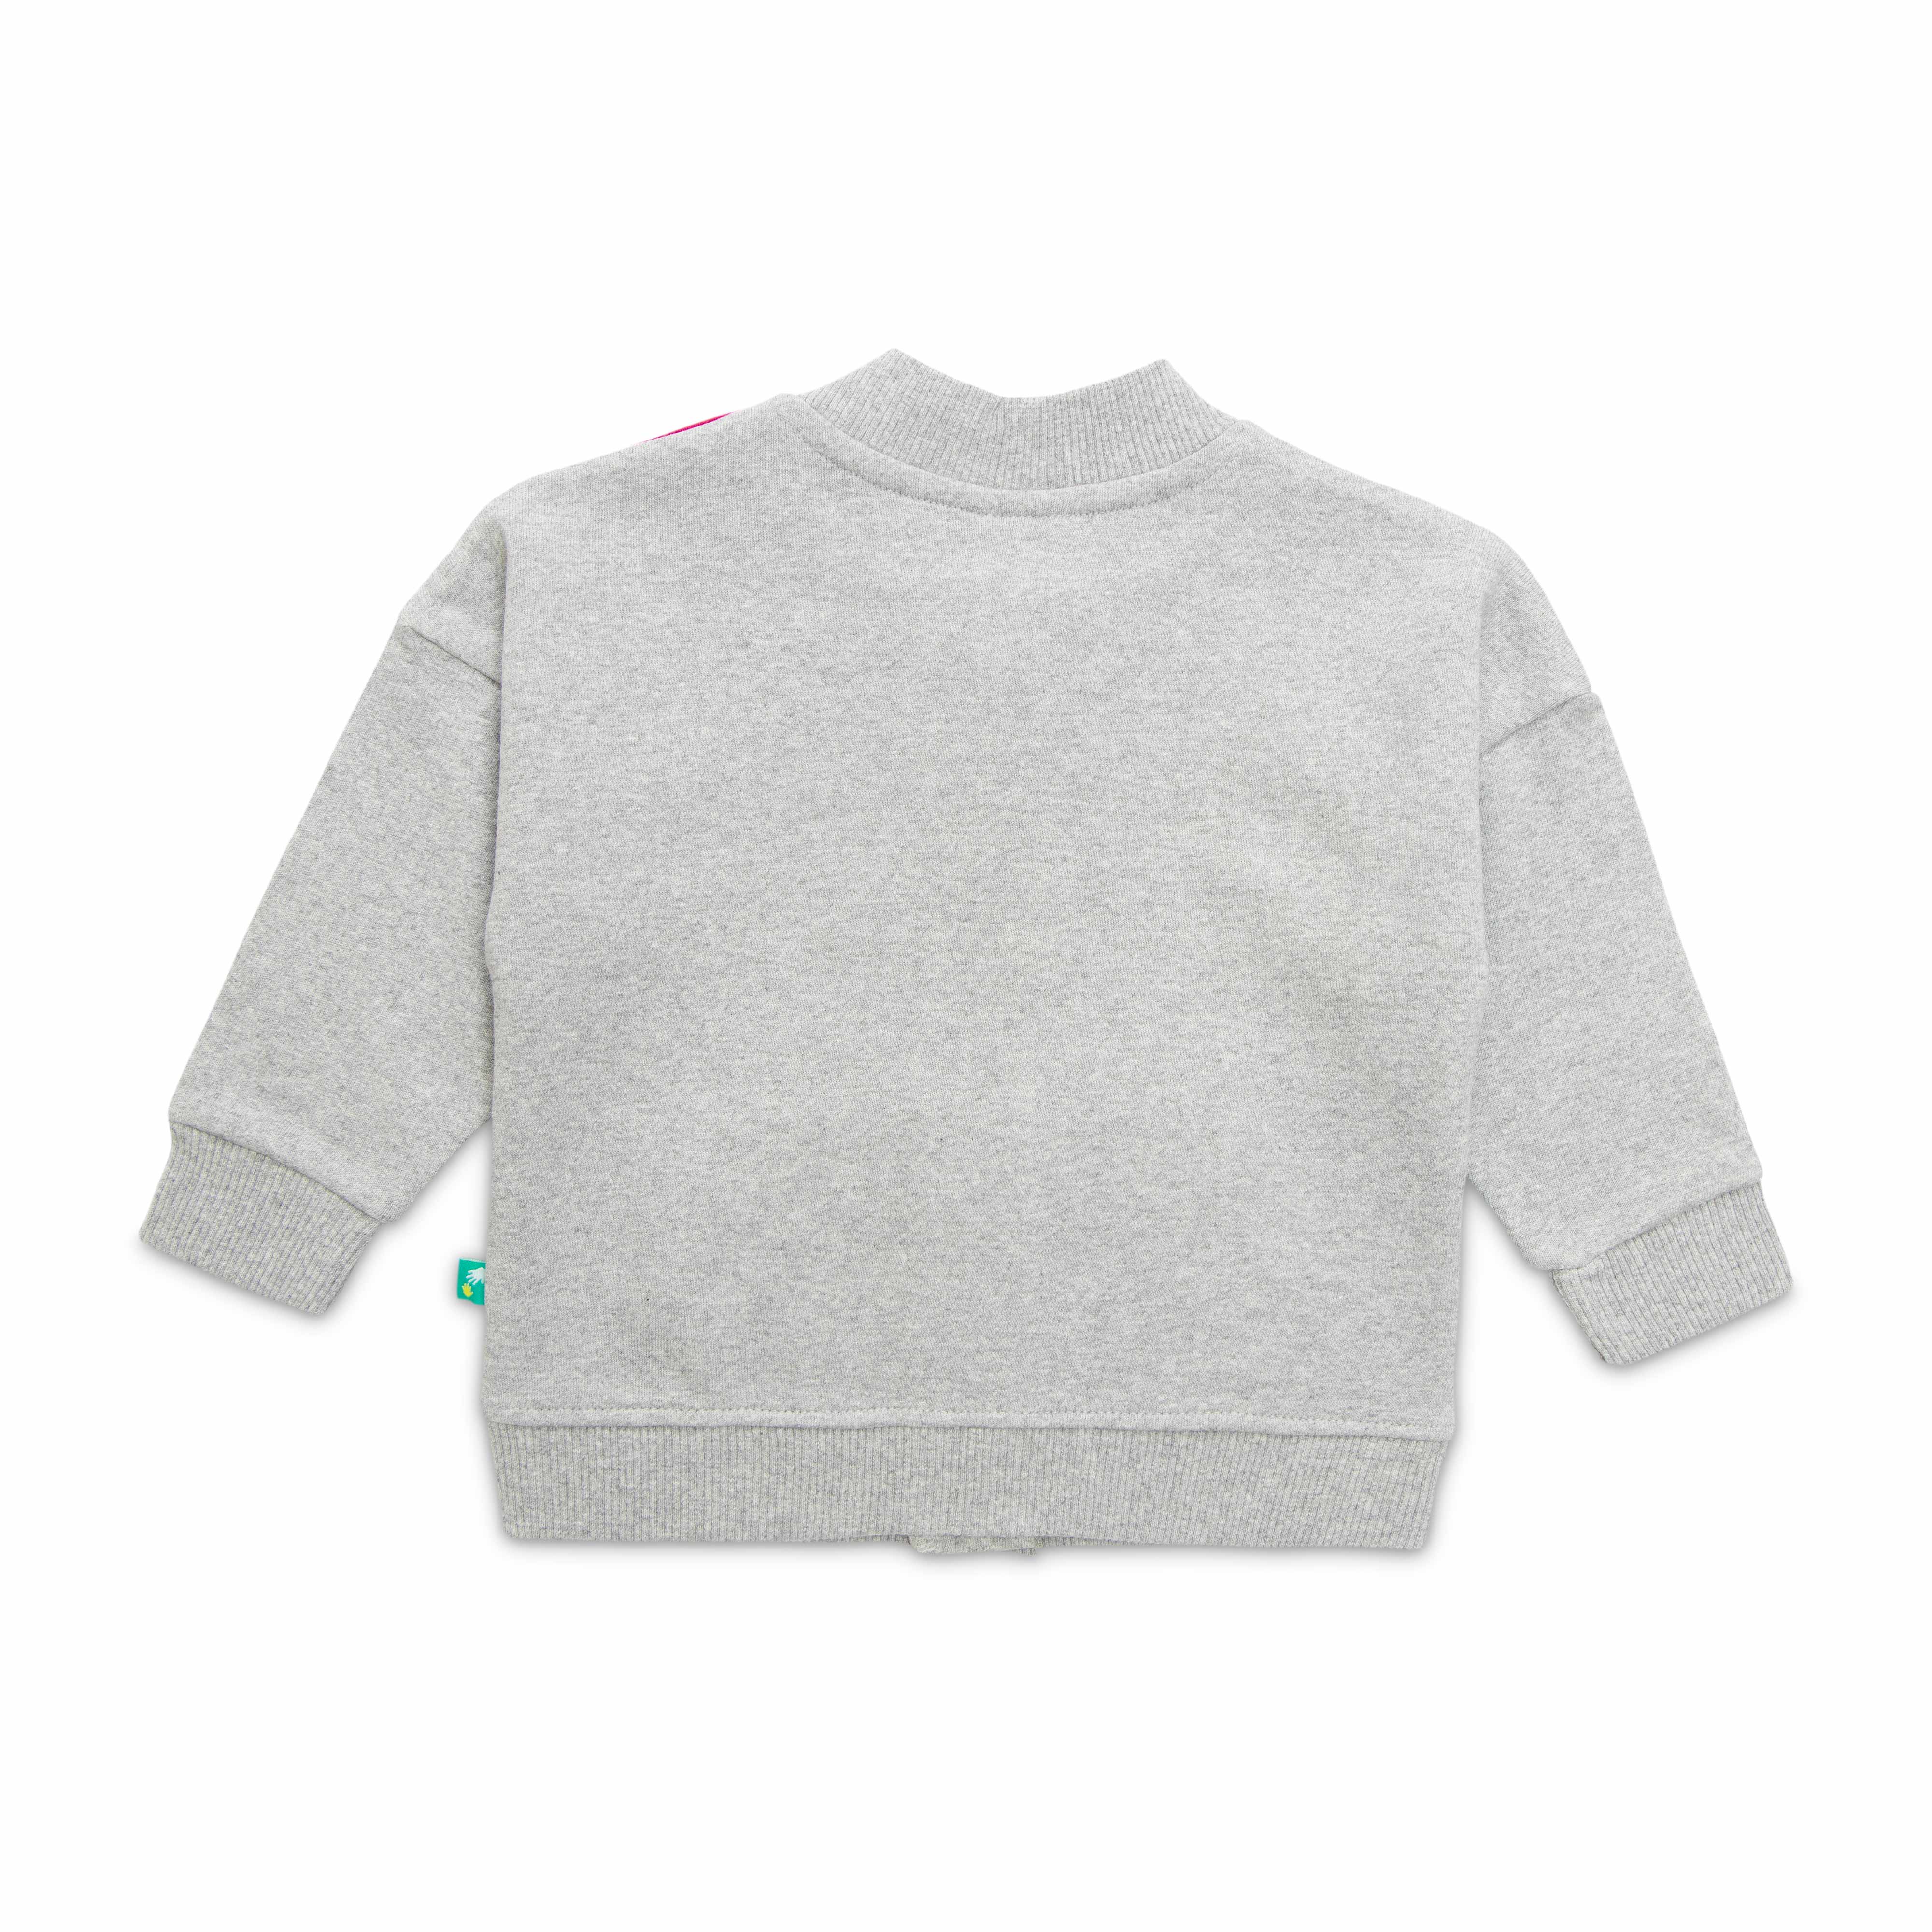 Girls Full Sleeve Embroidery SweaT-Shirt